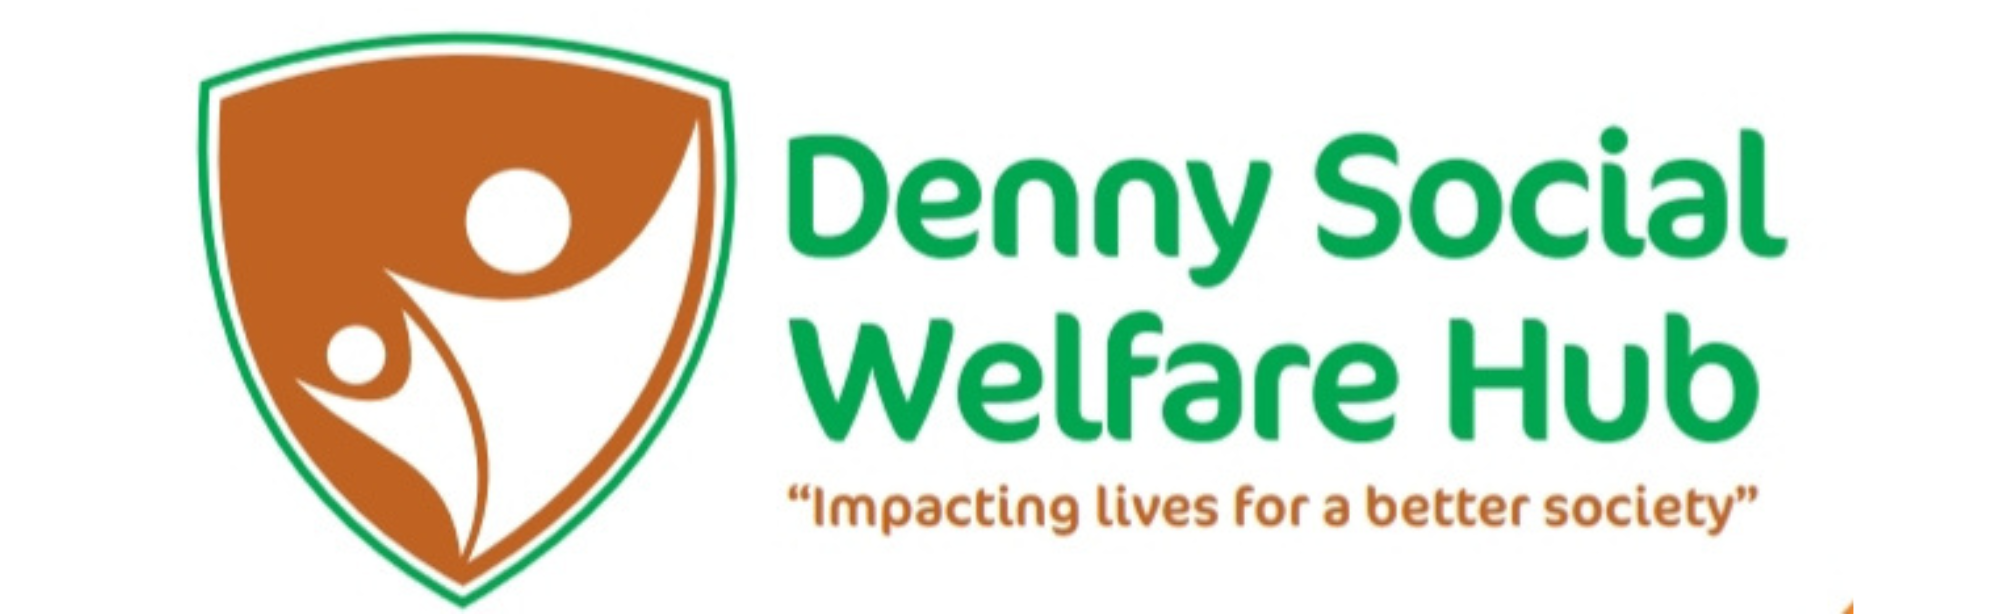 Denny Social Welfare Hub